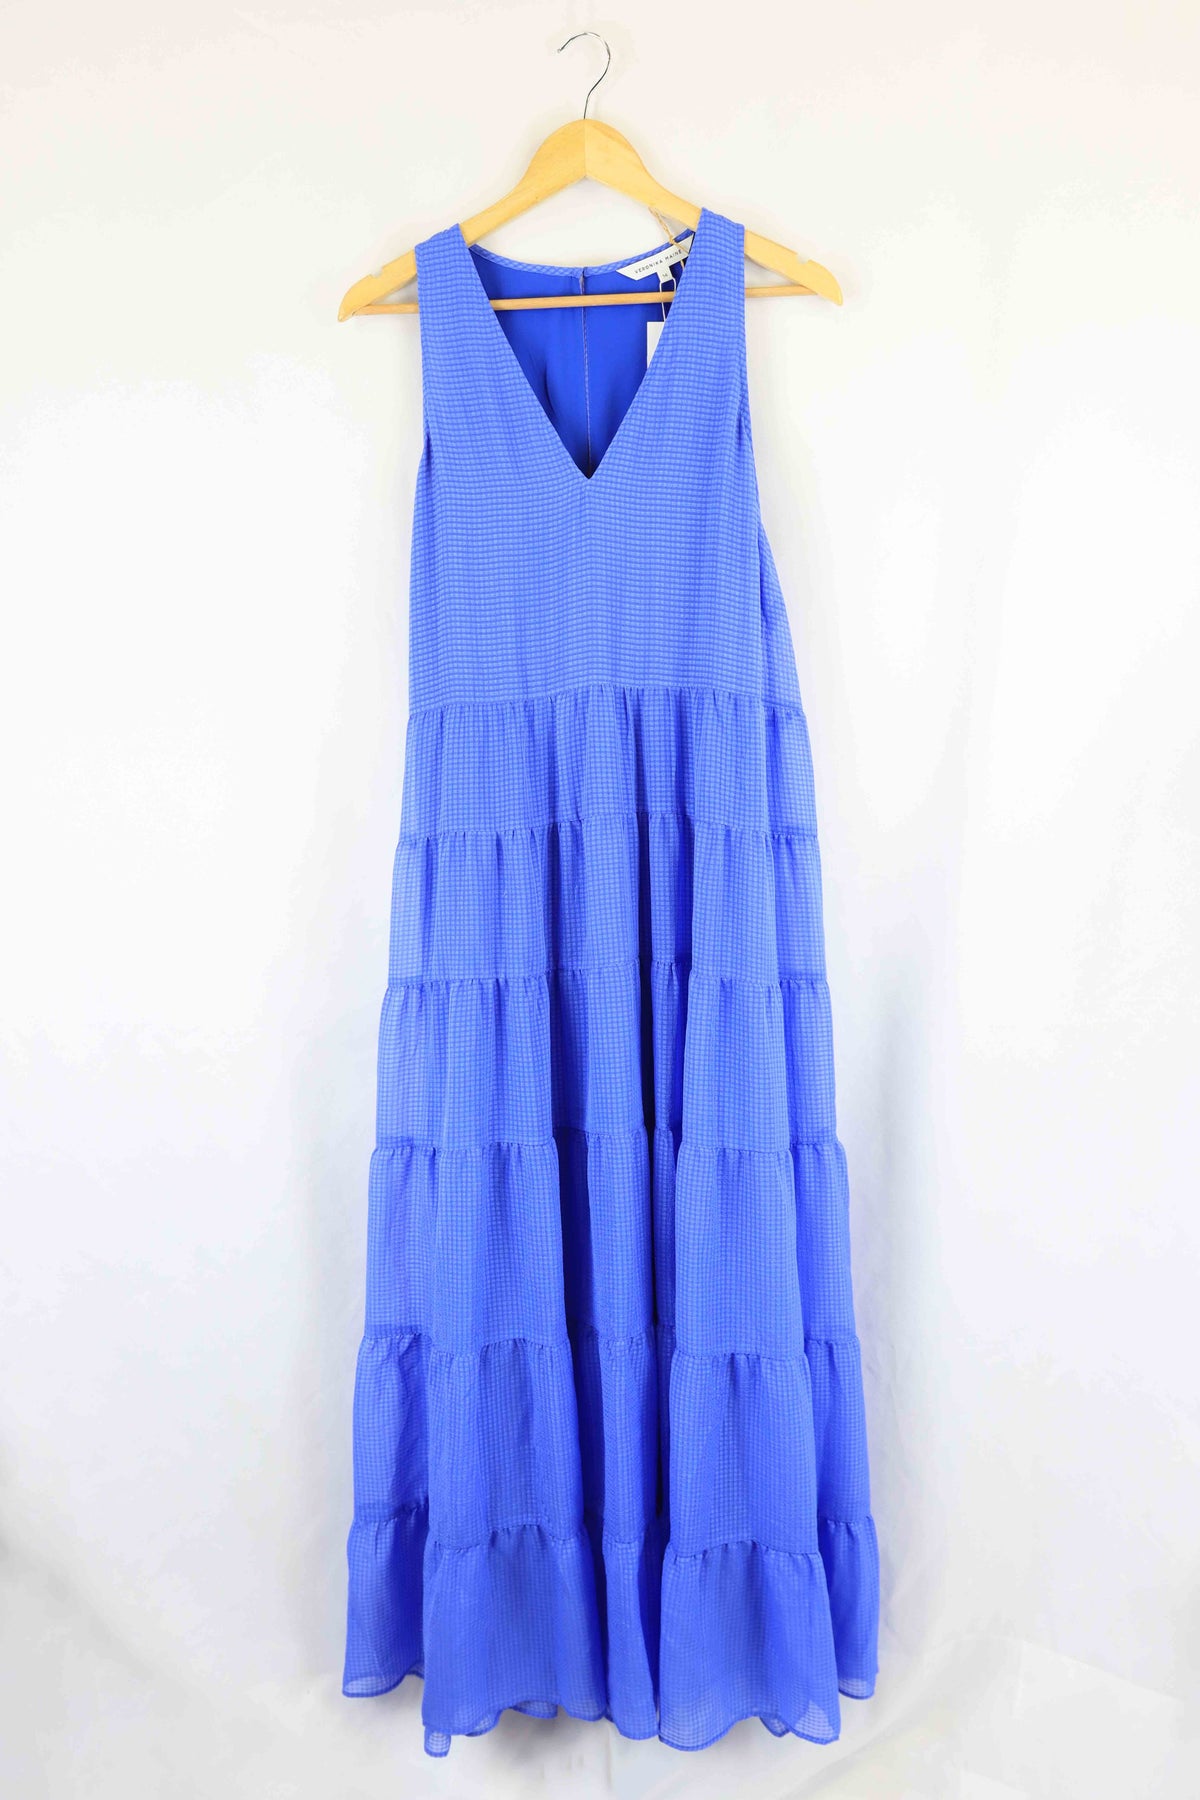 Veronika Maine Blue Dress 14